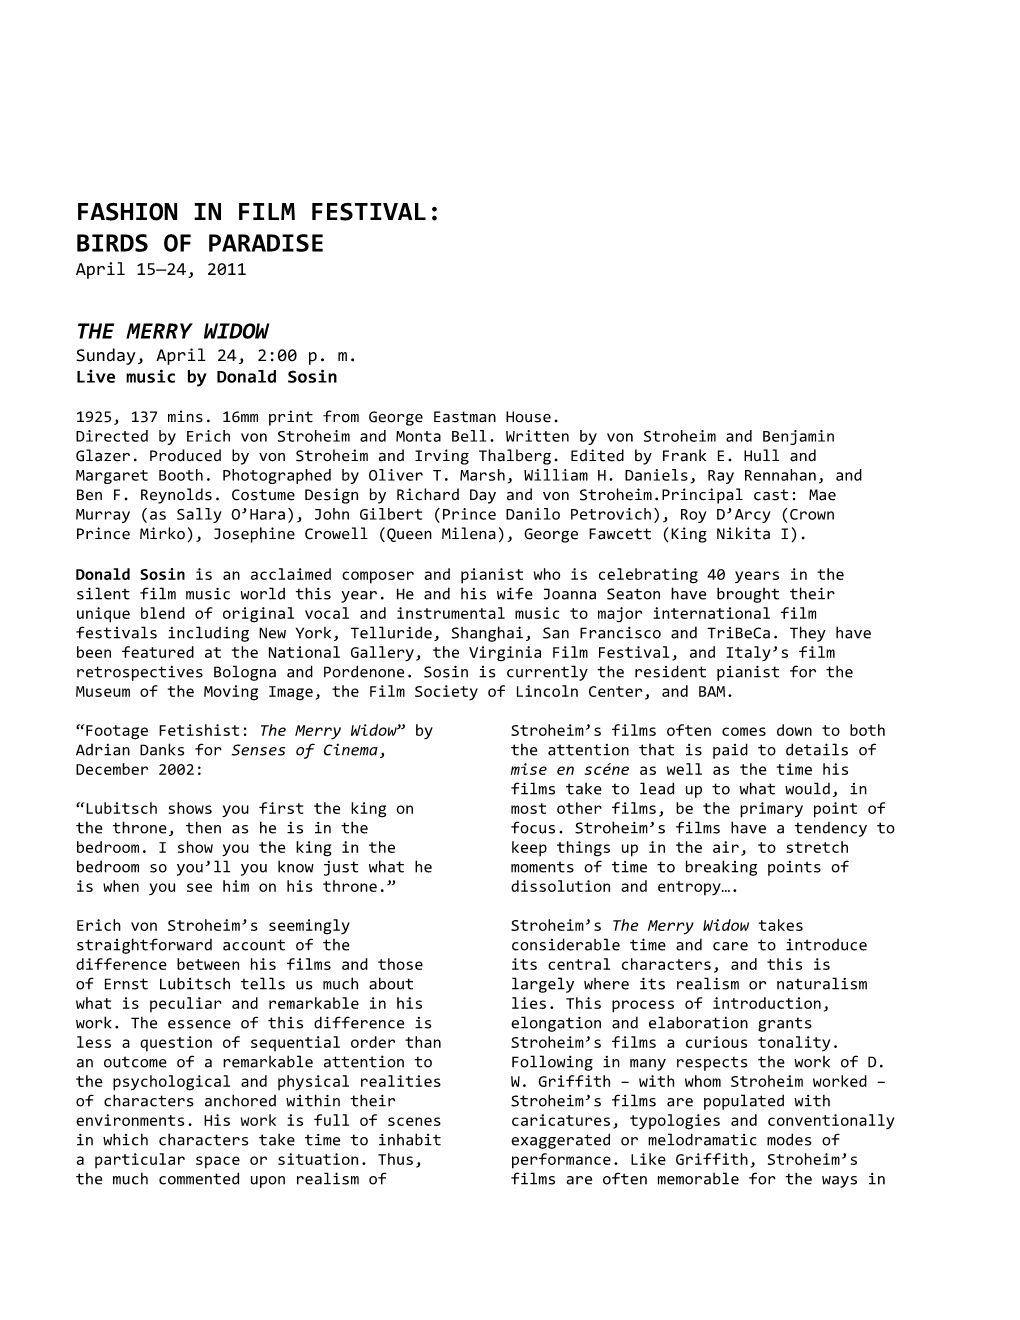 Fashion in Film Festival: Birds of Paradise